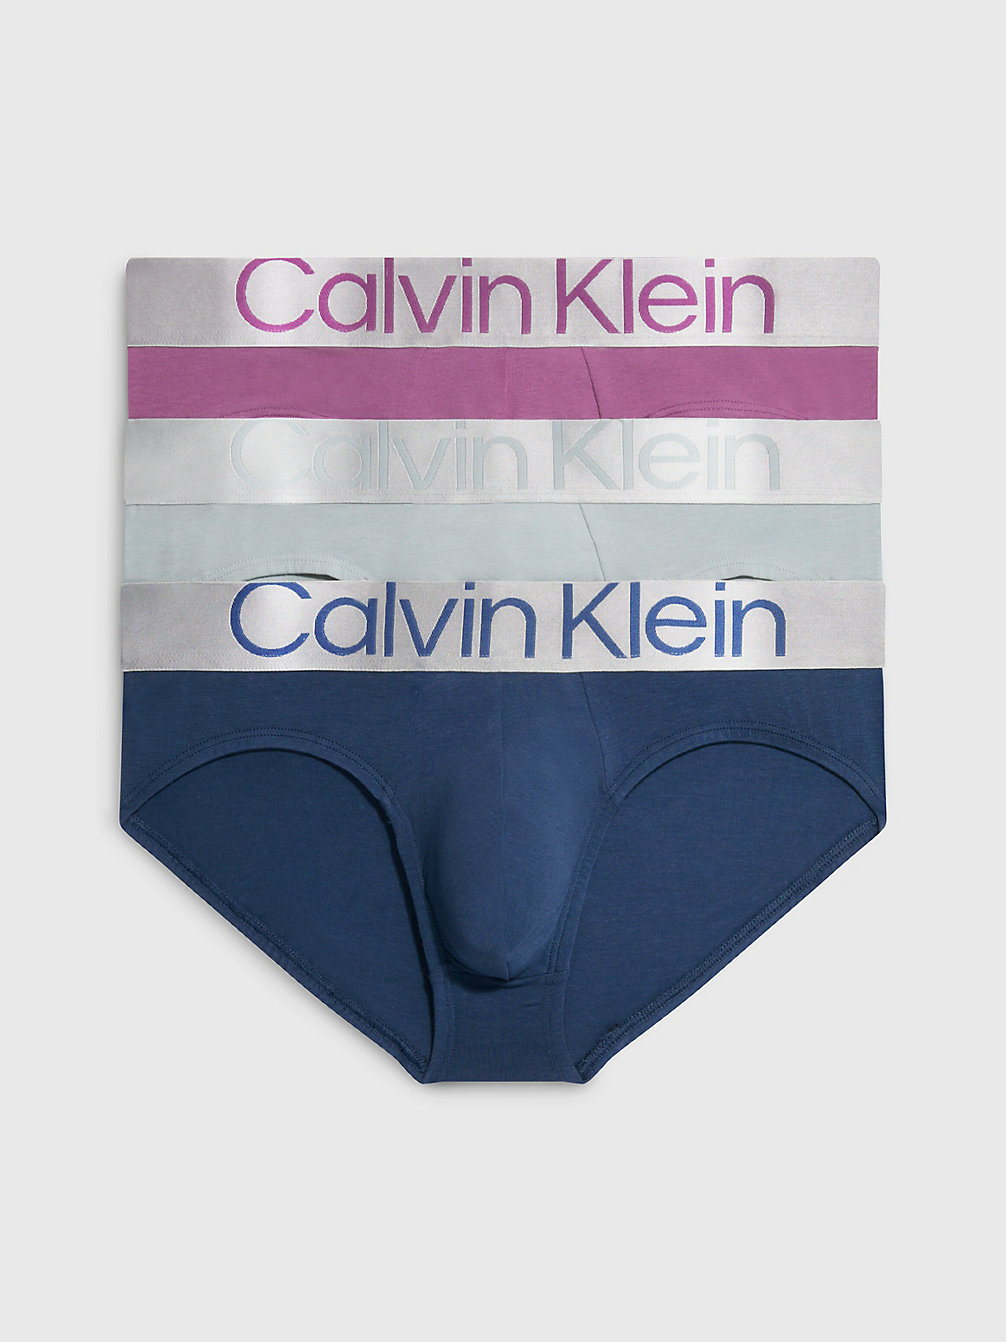 AMETHYST, SILVER SPRINGS, CRAYON BL Lot De 3 Slips - Steel Cotton undefined hommes Calvin Klein